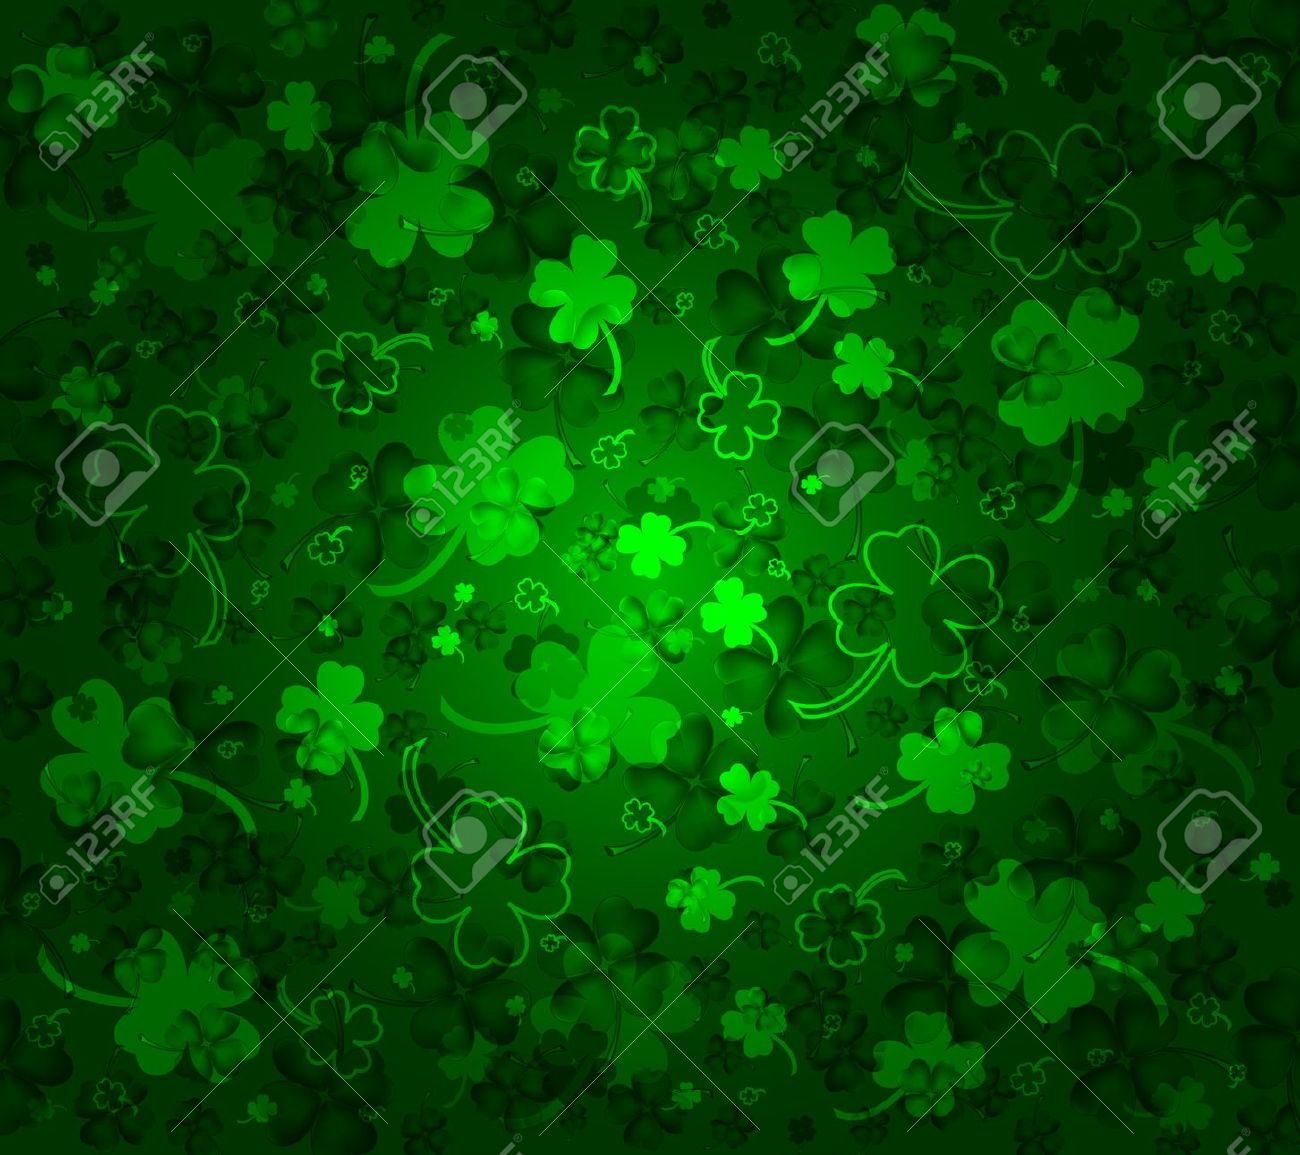 St-Patrick-Day-Wallpaper-Shamrocks-2.jpg